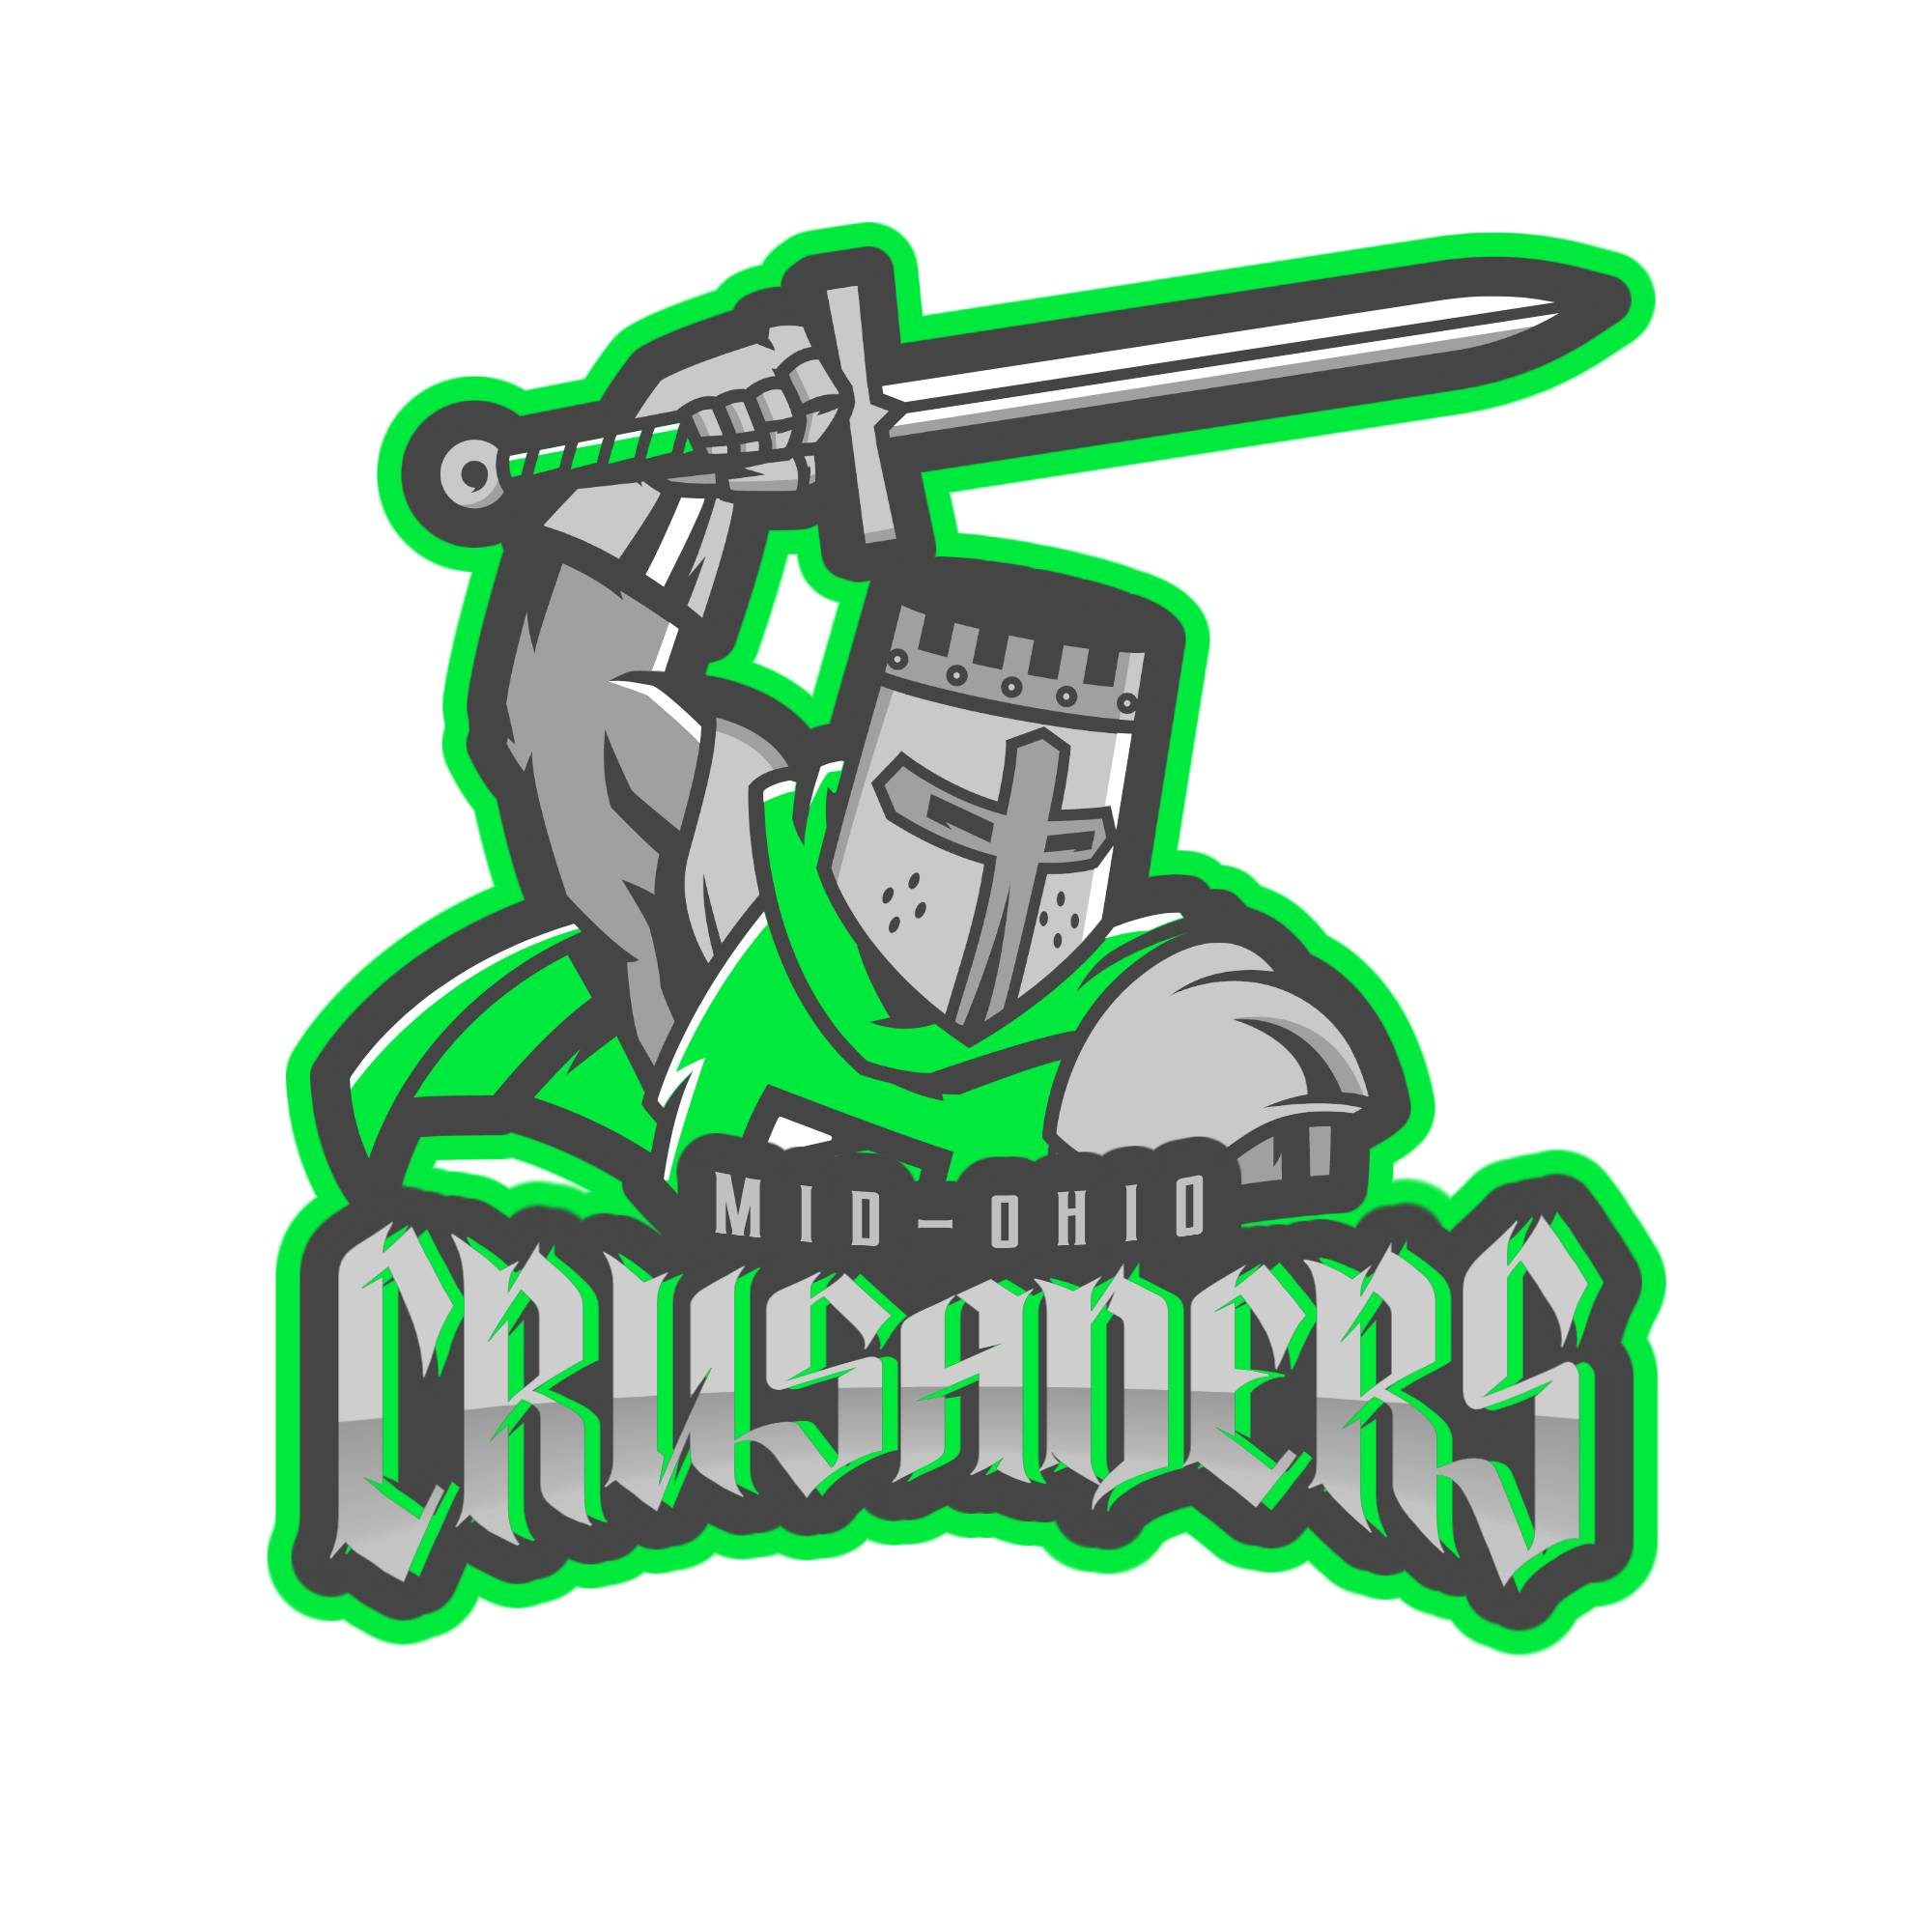 Mid-Ohio Crusaders travel baseball Crestline Ohio BaseballConnected.com